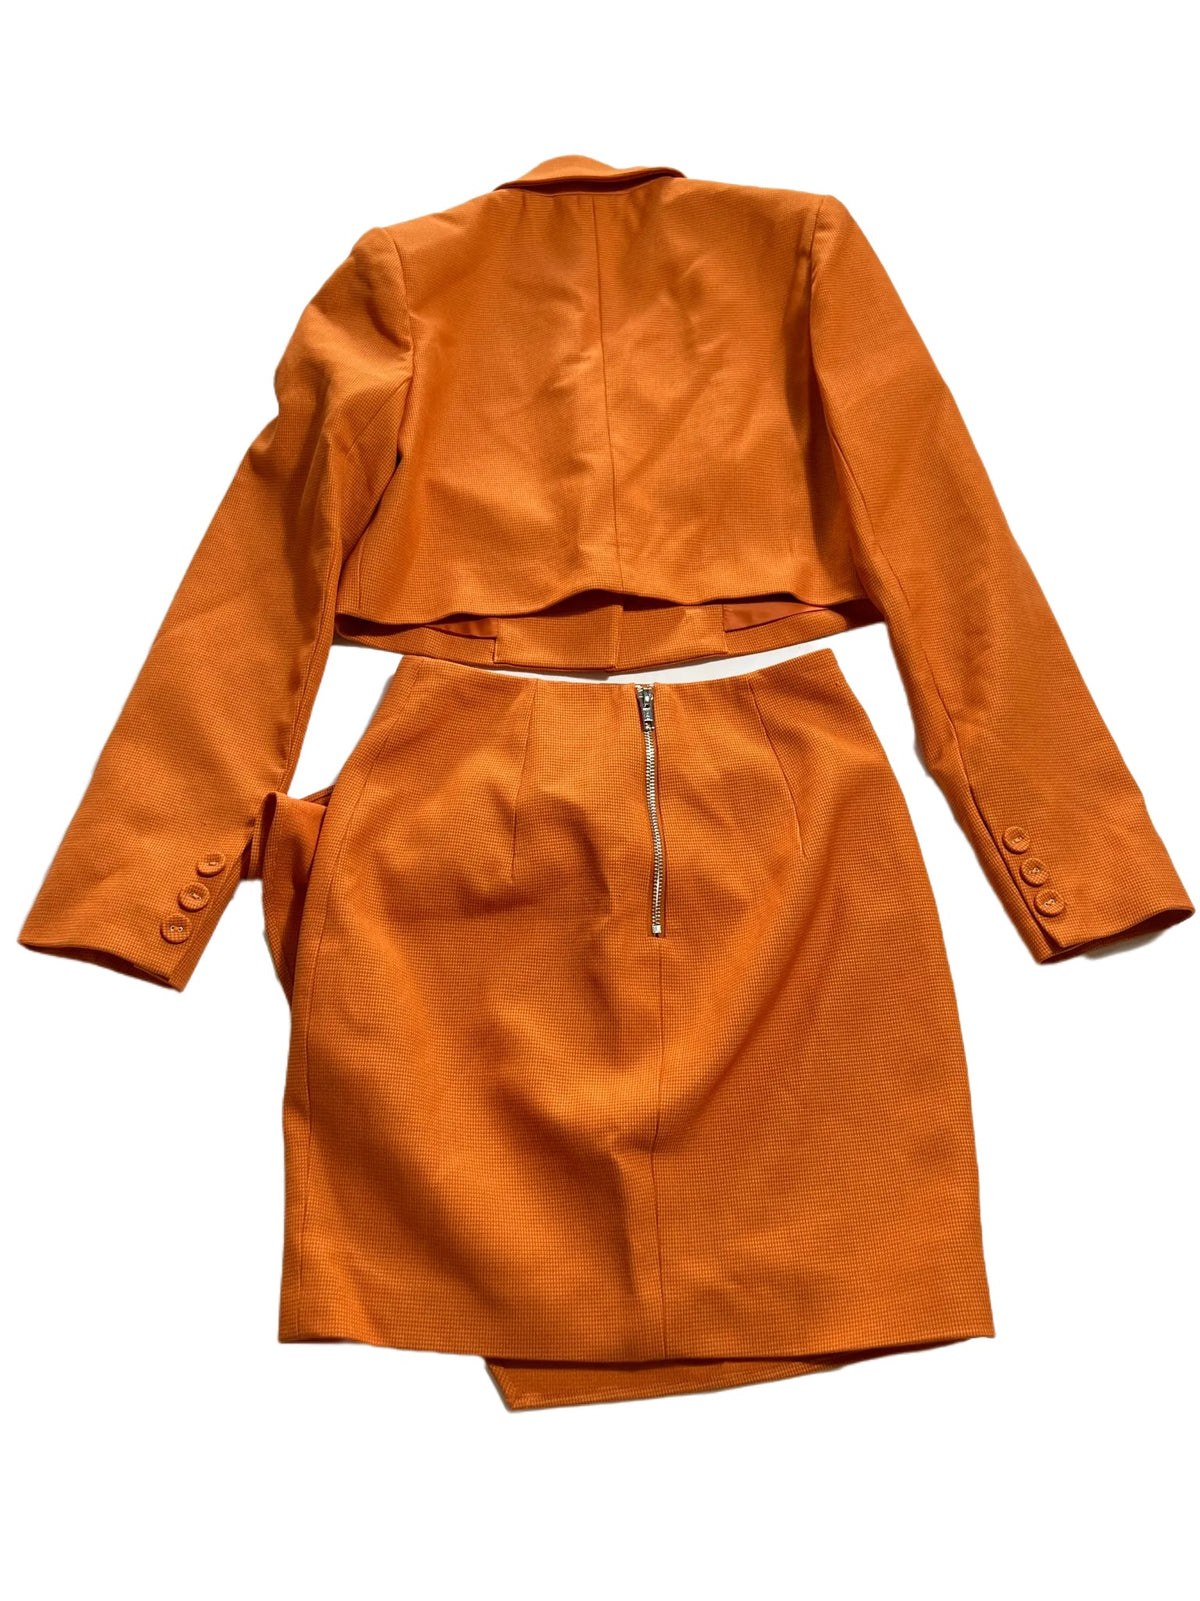 Mossman- Orange "Take Me Higher" Blazer and Mini Skirt Matching Set New With Tags!